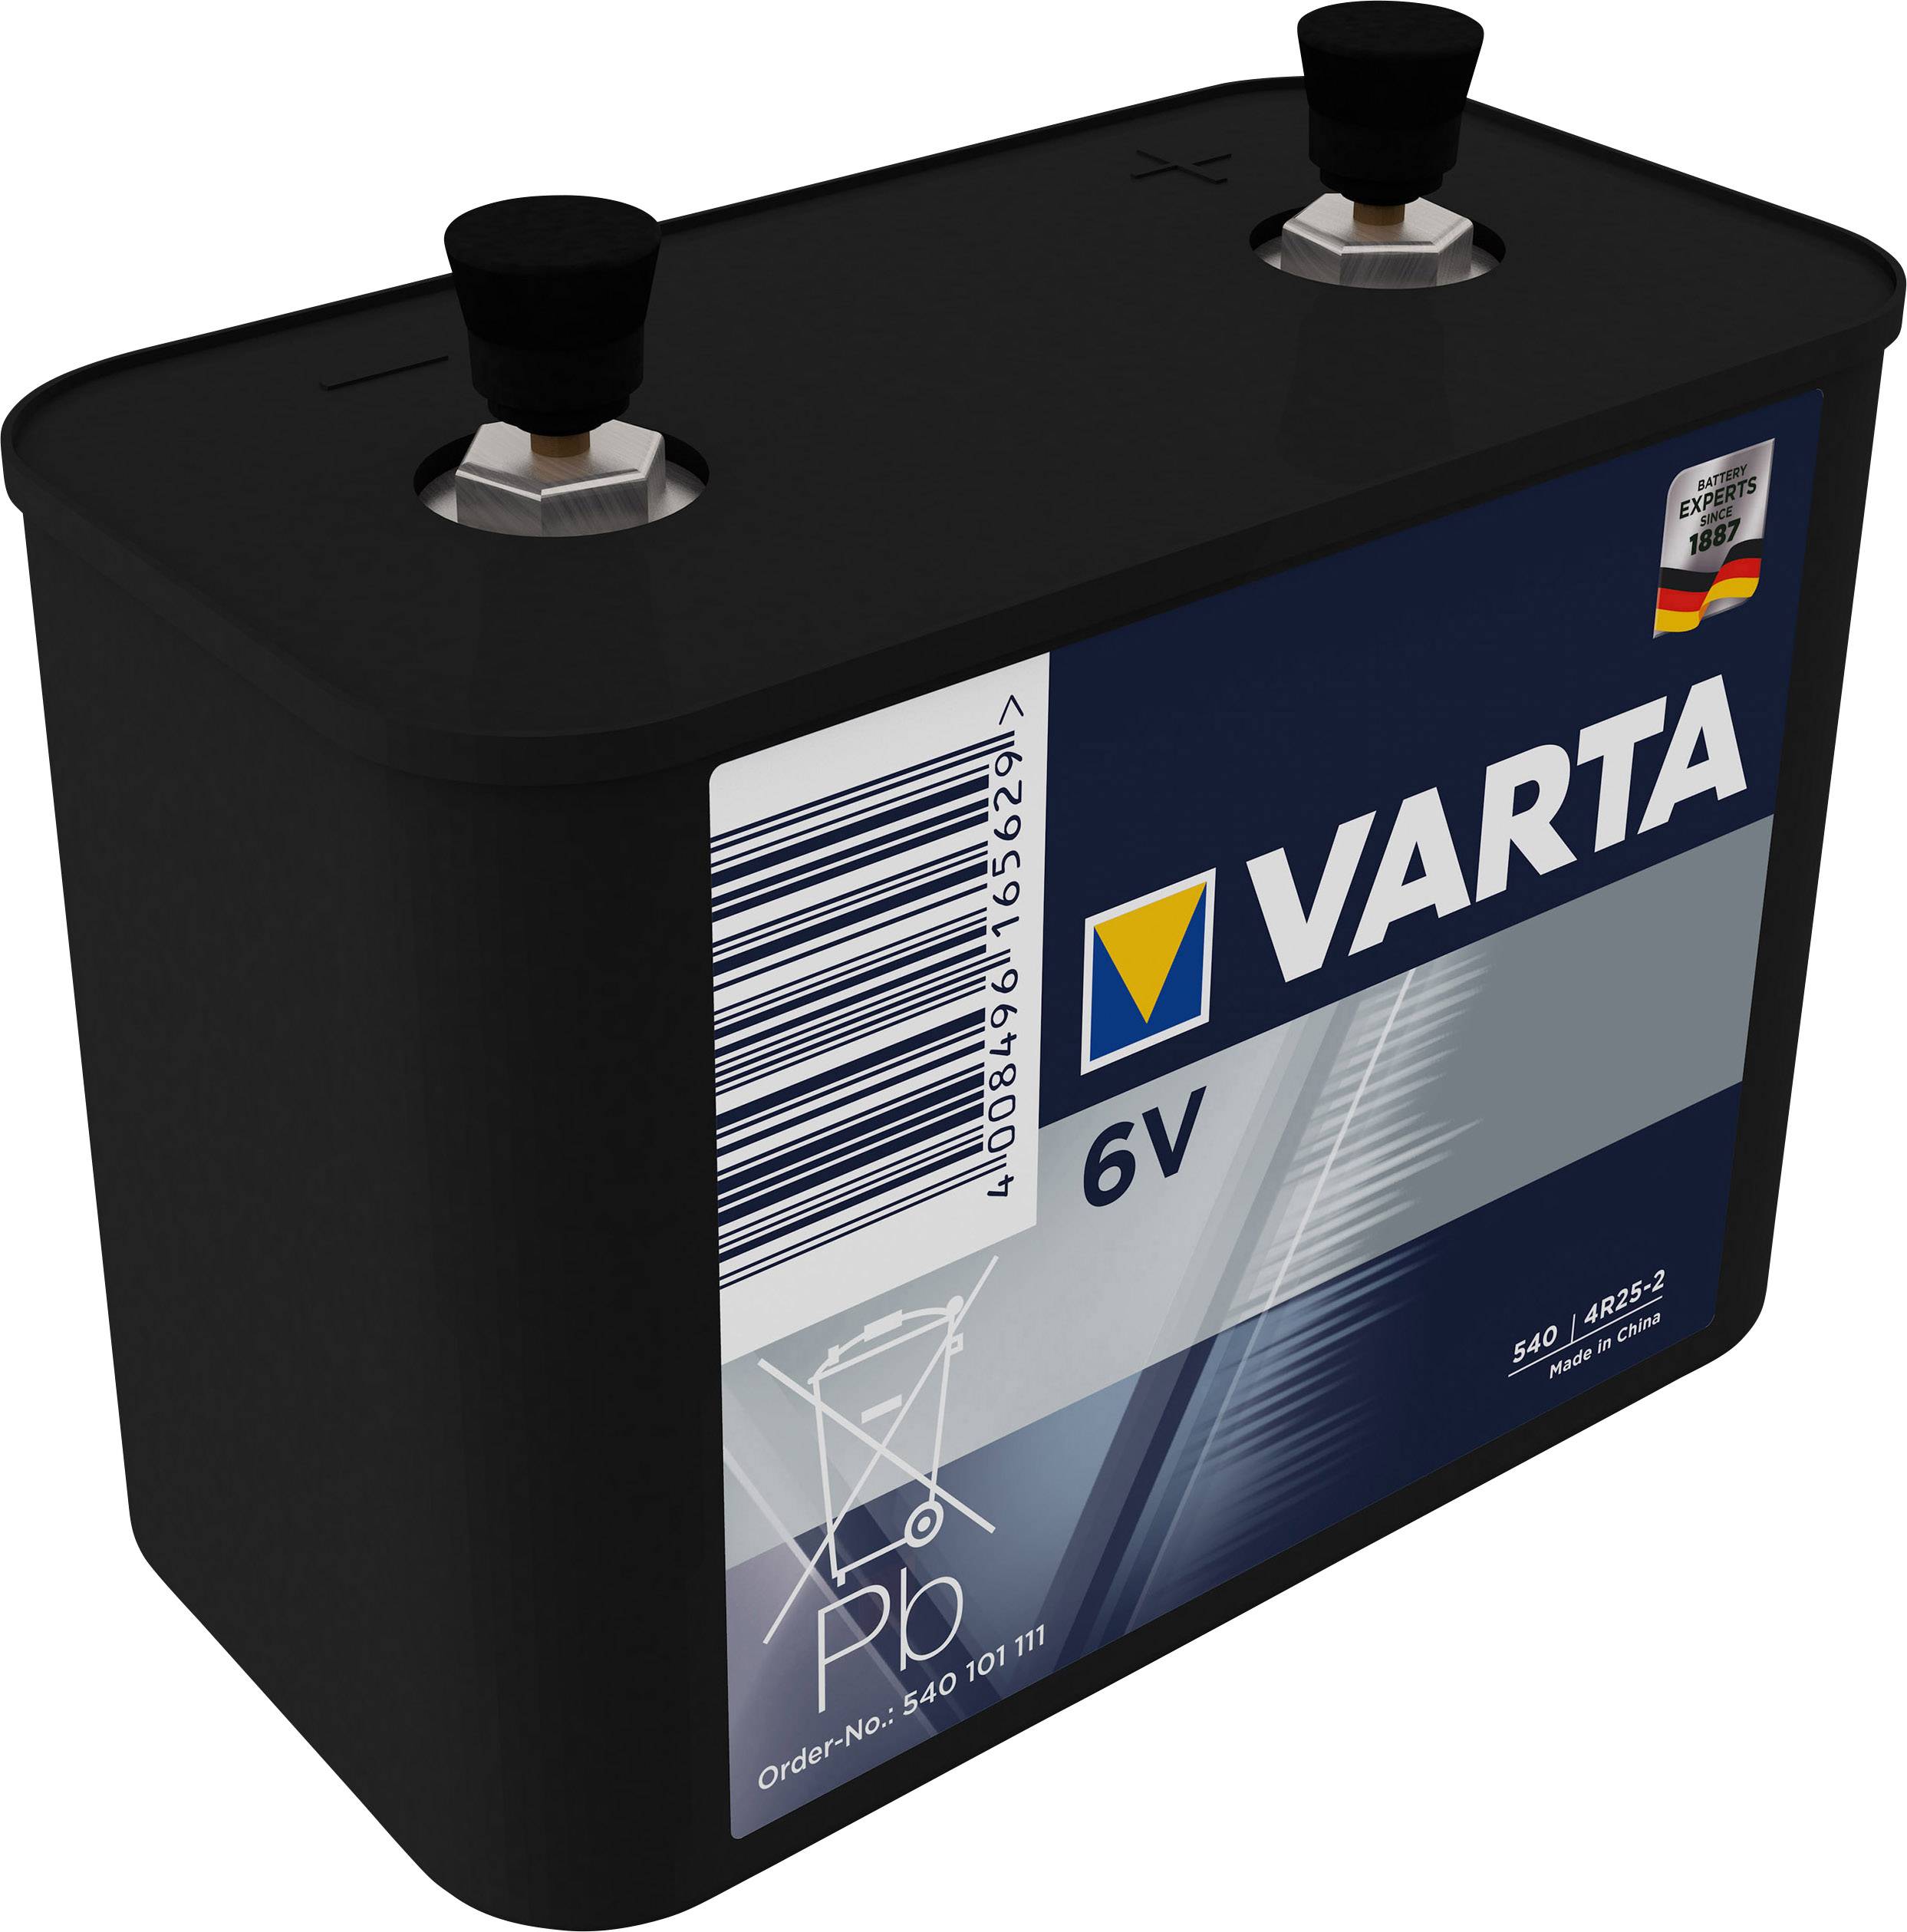 VARTA Spezial-Batterie 4R25-2 Schraubkontakt Zink-Kohle Varta Spezial 4R25-2 6 V 19 Ah 1 St.